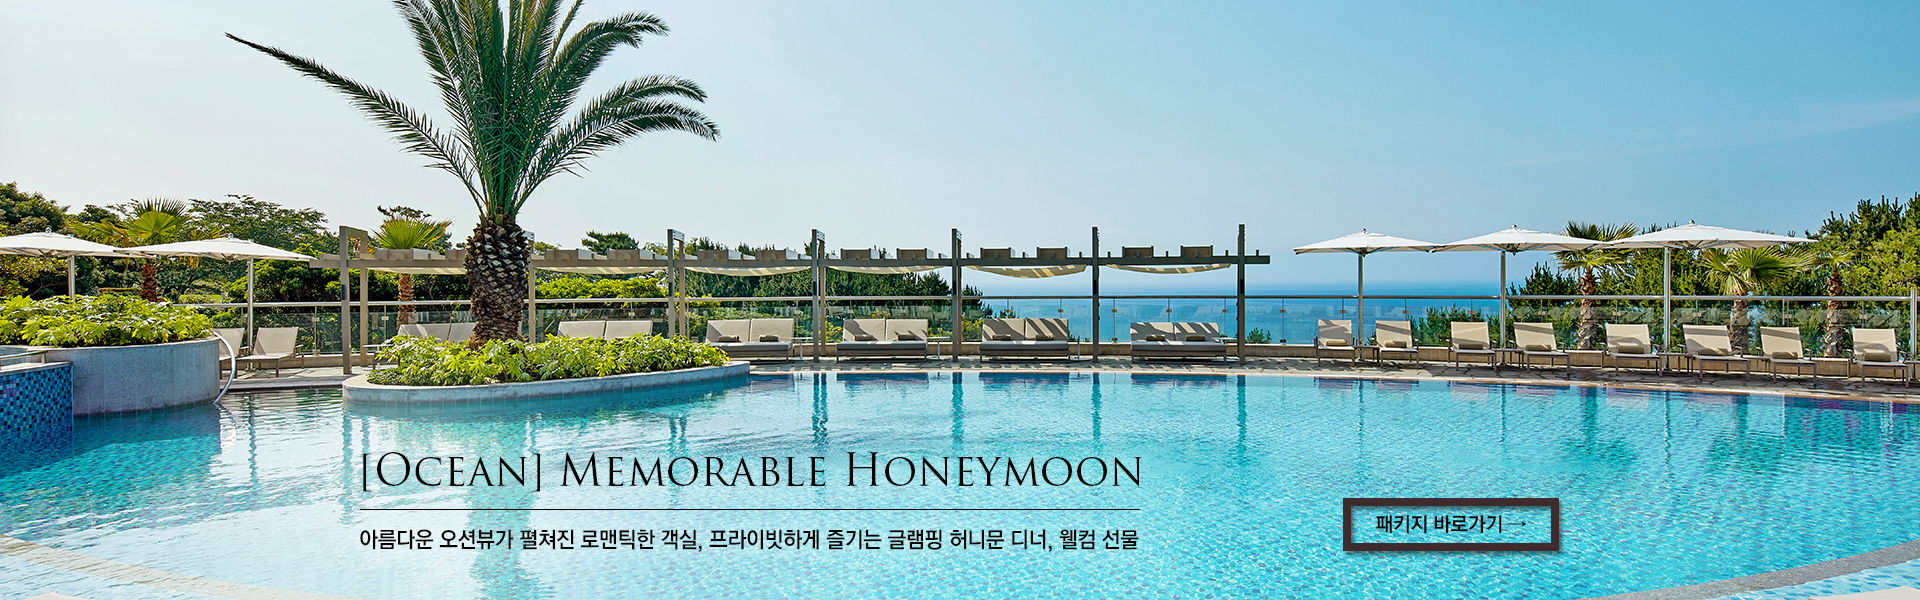 Memorable Honeymoon - Ocean